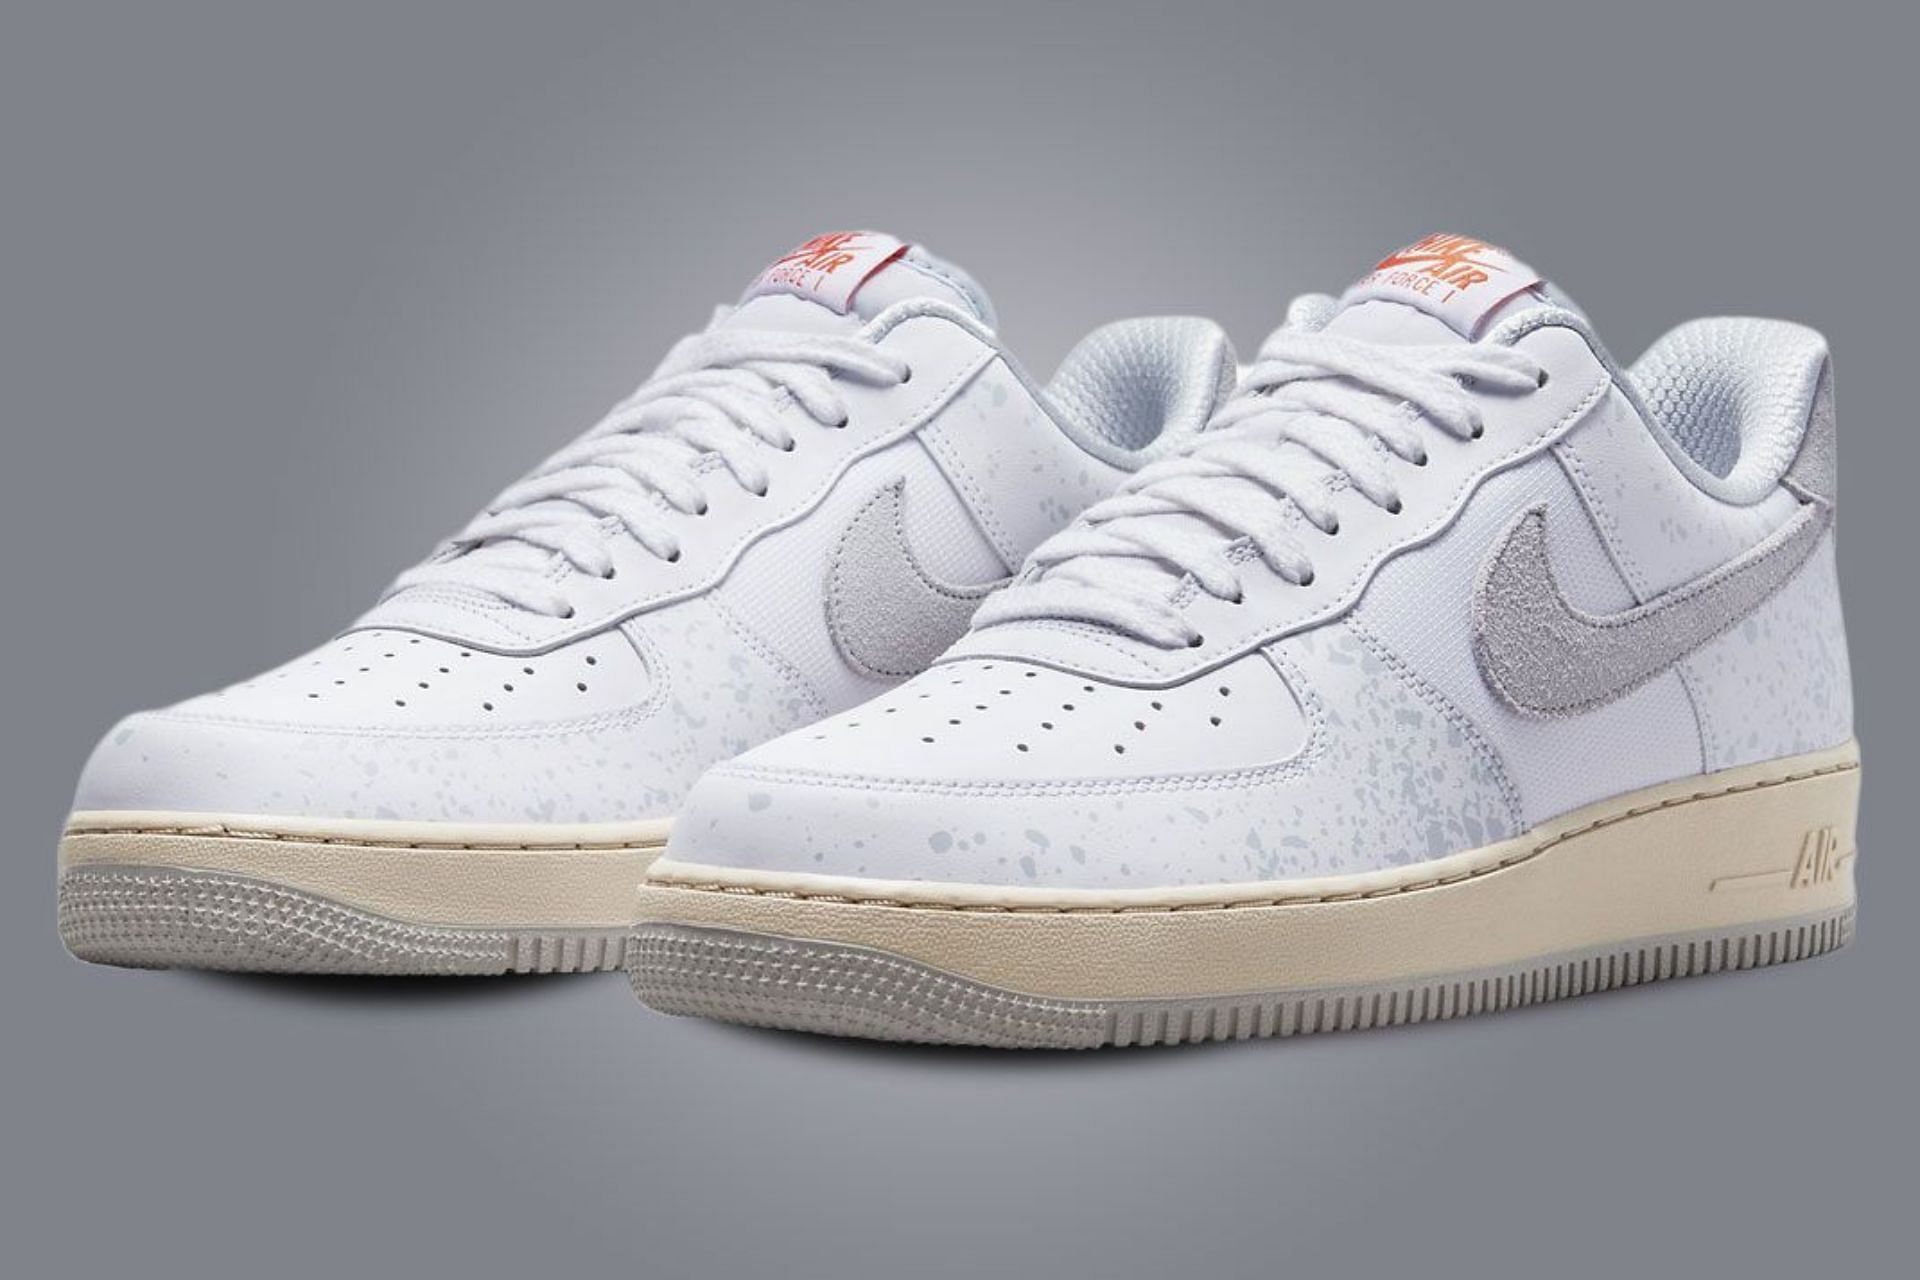 Nike Air Force 1 Low Paint Splatter Gray shoes (Image via Nike)